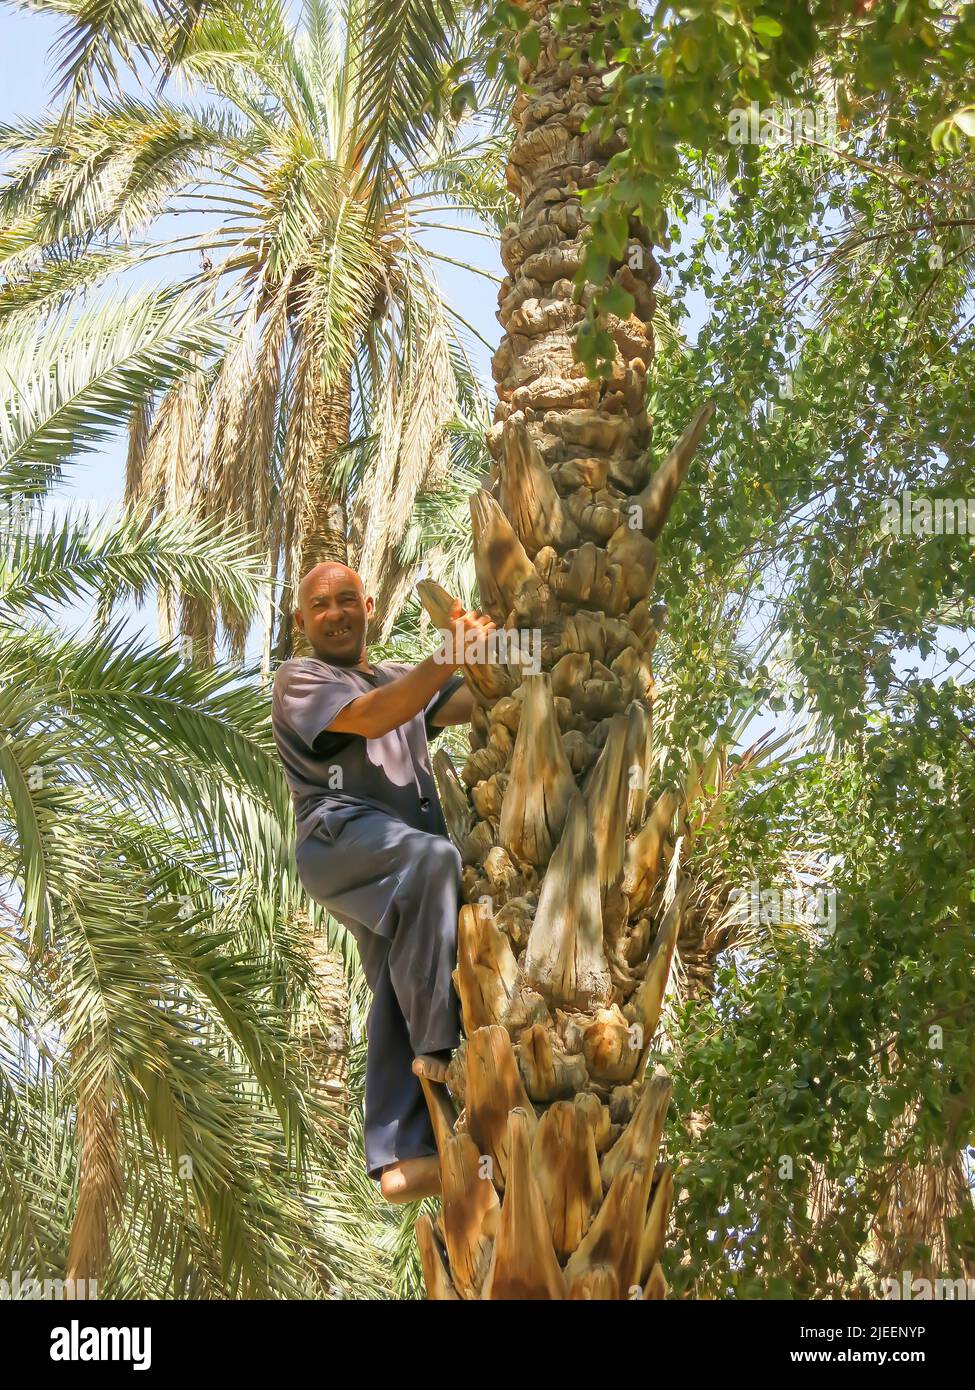 Tree Climber Decending Date Palm in Desert Oasis, Tunisia Stock Photo